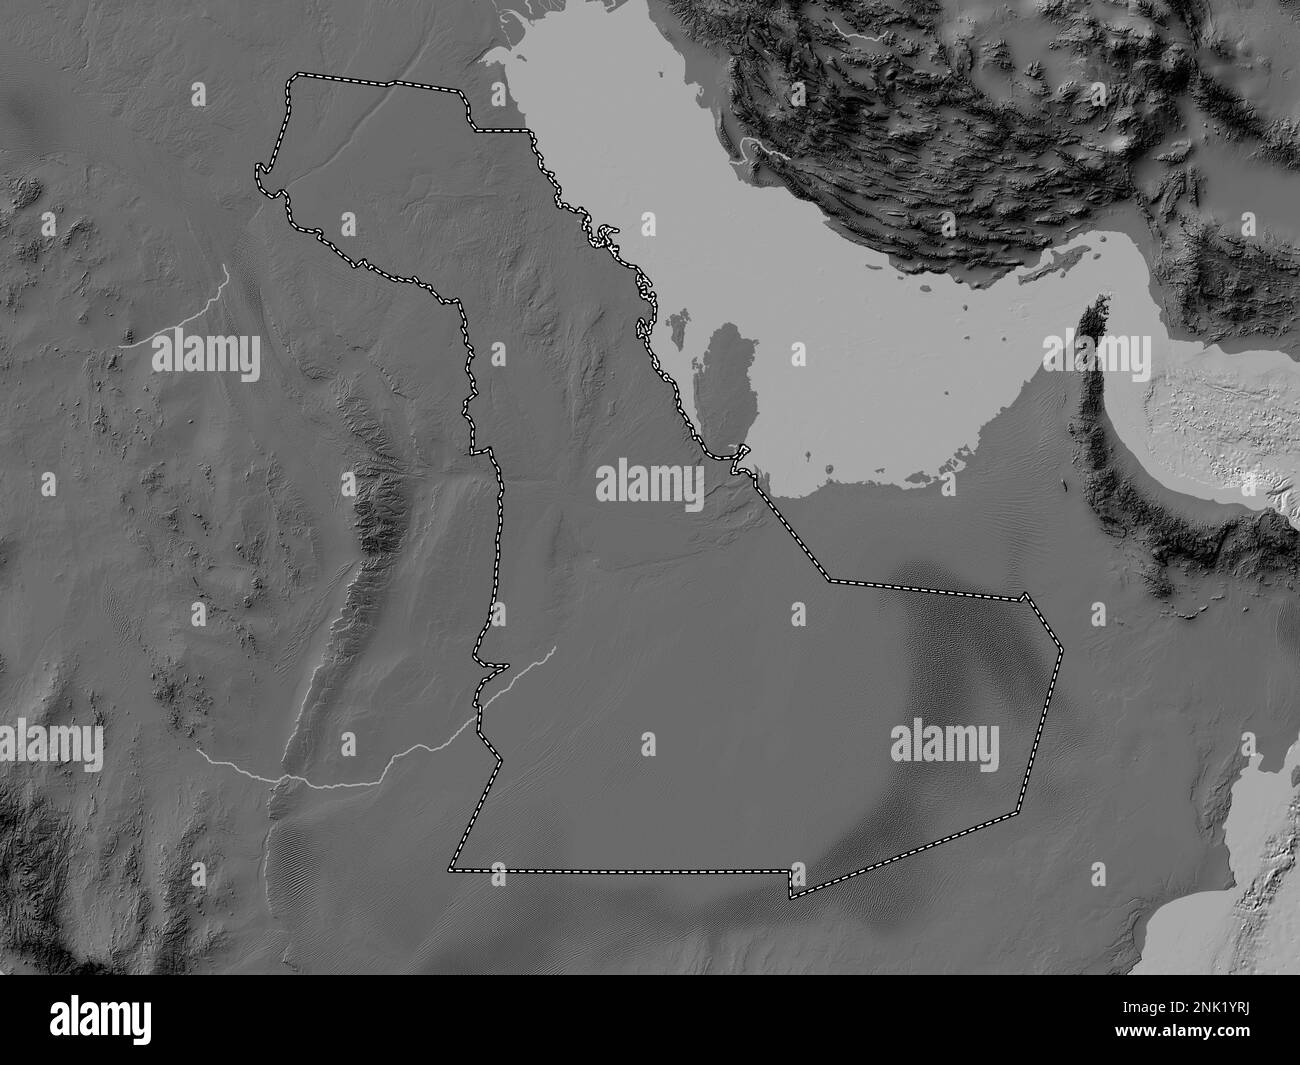 Ash Sharqiyah, region of Saudi Arabia. Bilevel elevation map with lakes and rivers Stock Photo